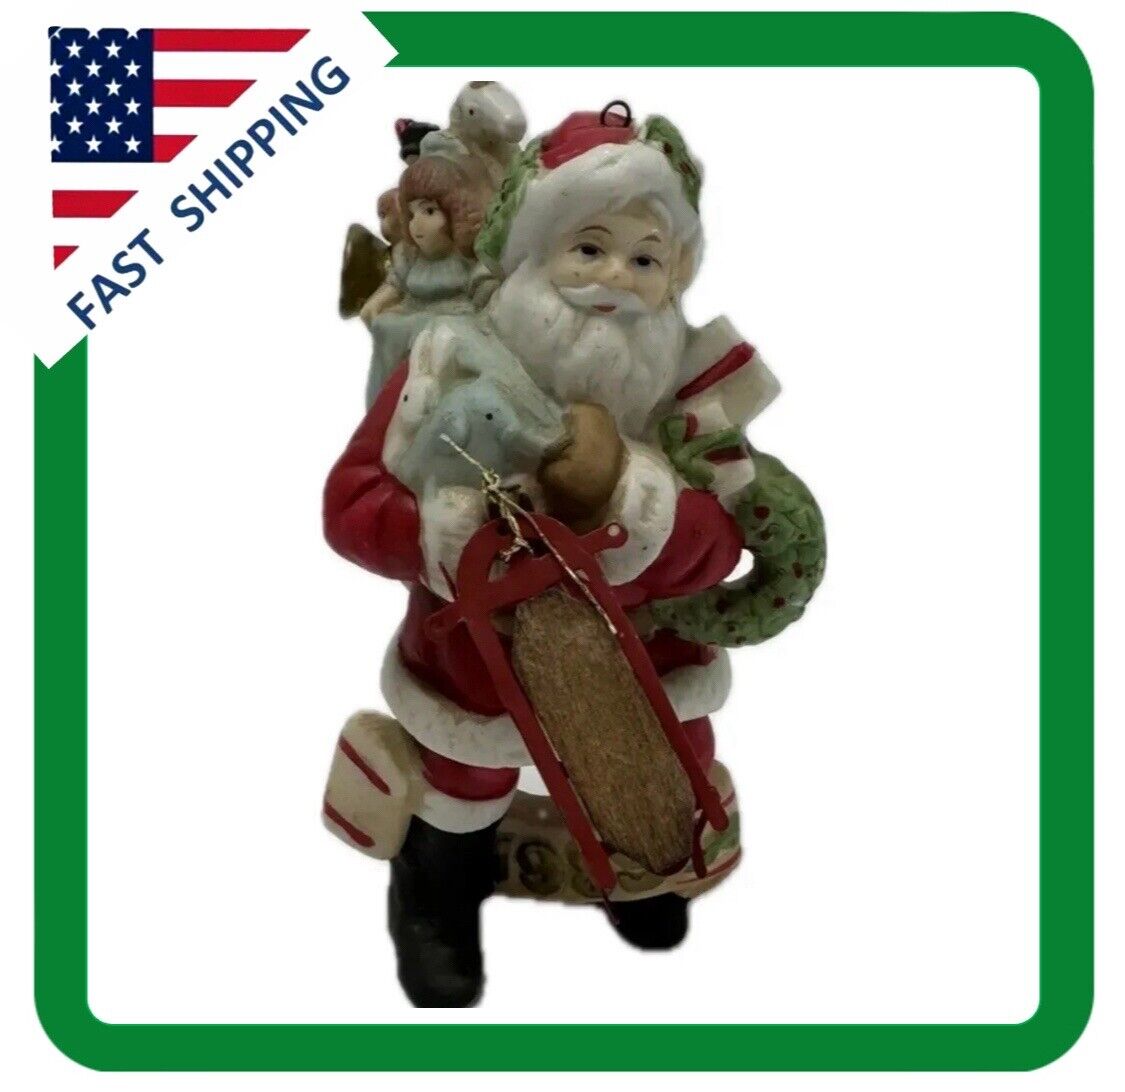 1989 Enesco Imports The Gifted Line Santa Figurines w sled By John Grossman 